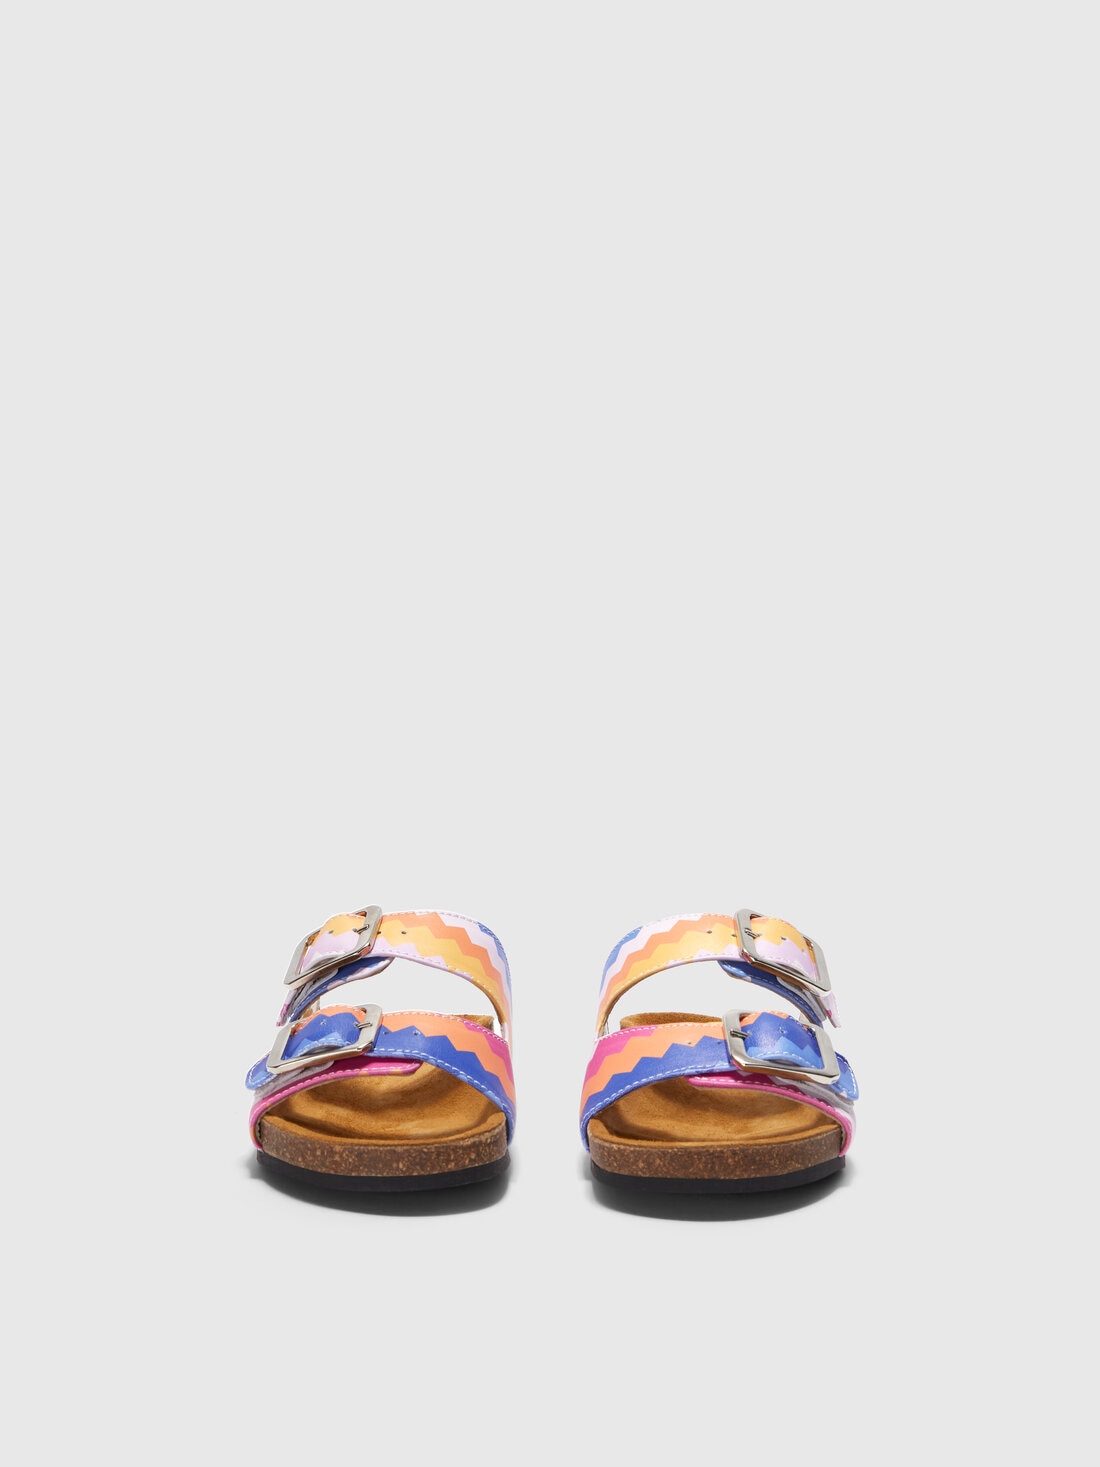 Sandalias con doble tira y motivo de espigas, Multicolor  - KS24SY01BV00FWSM923 - 2